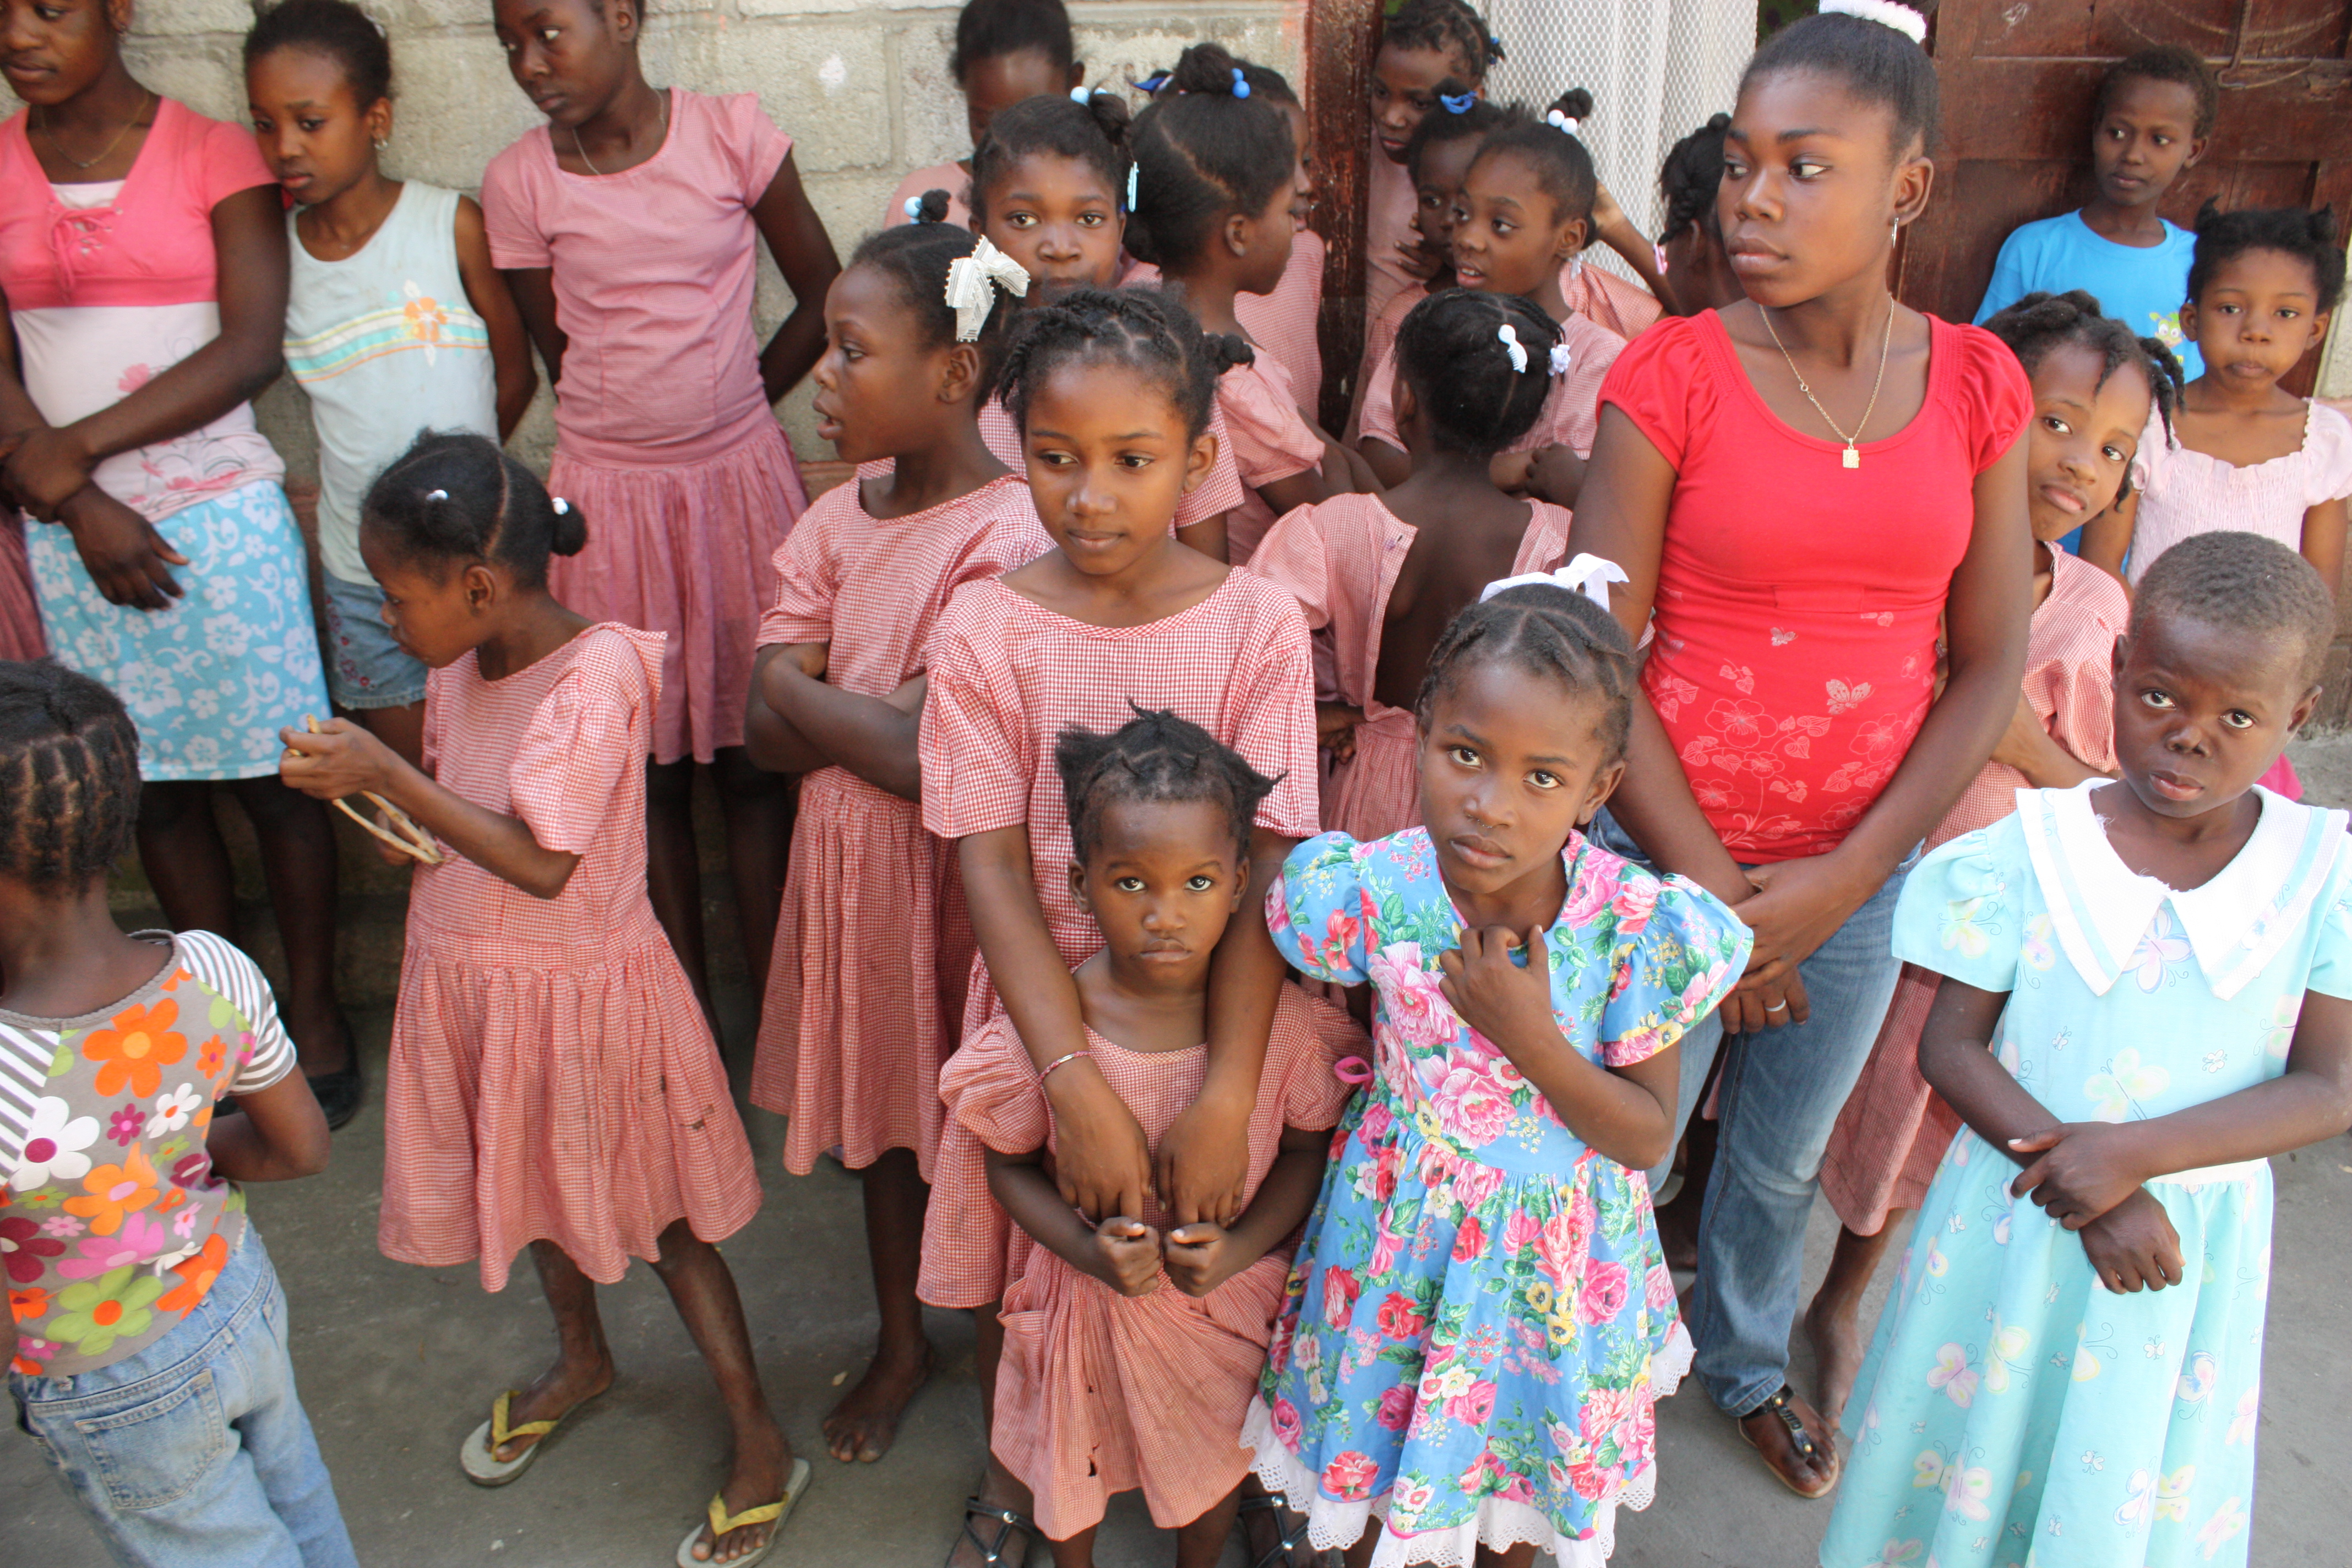 Dominican and Haitian children